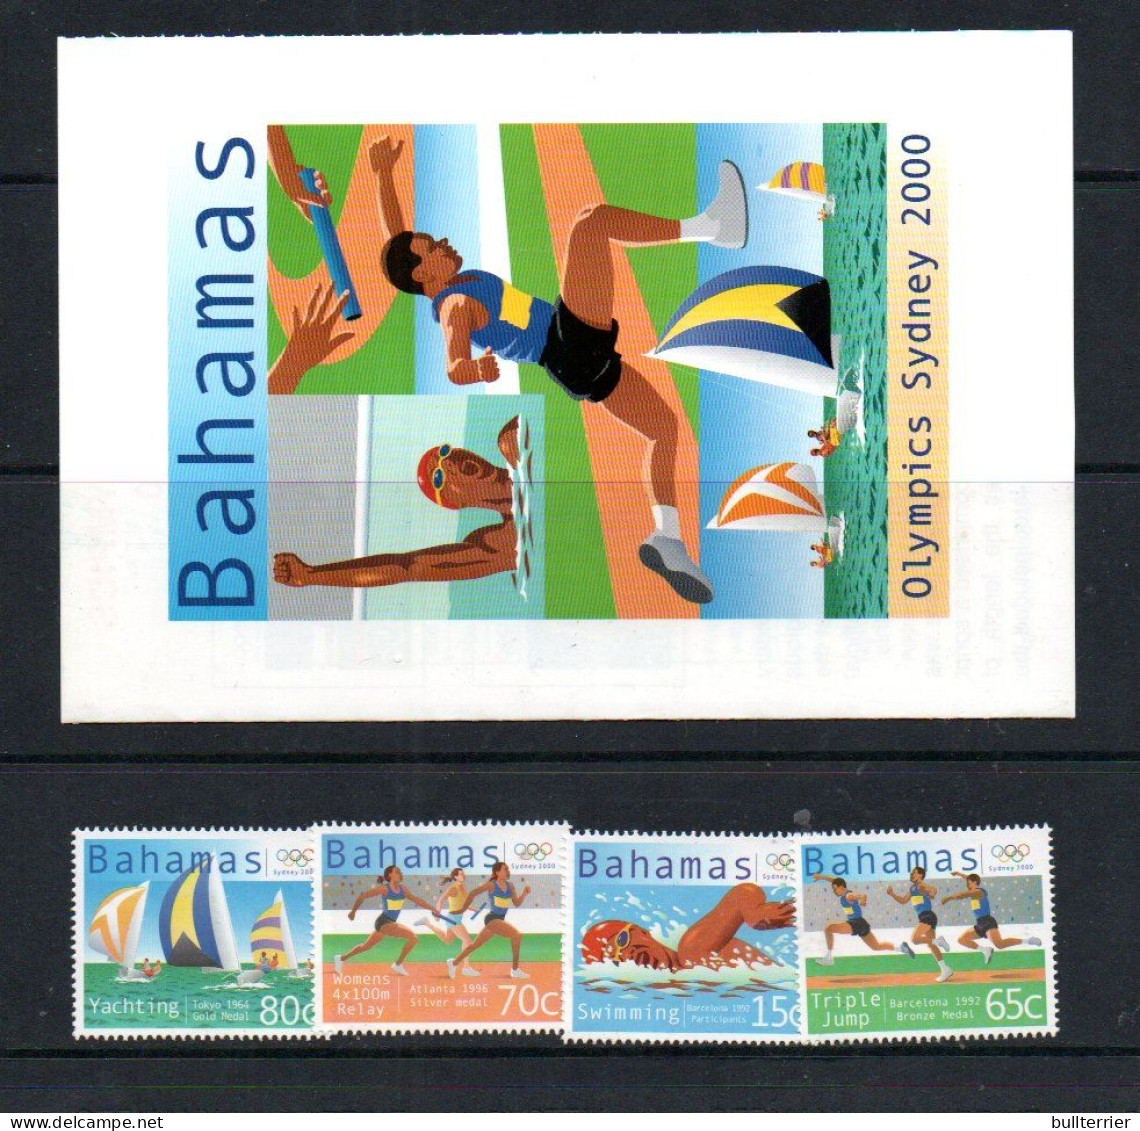 OLYMPICS -  BAHAMAS  - 2000-Sydney Olympics Set Of 4 + PUBLICITY Sheet  Mint Never Hinged - Estate 2000: Sydney